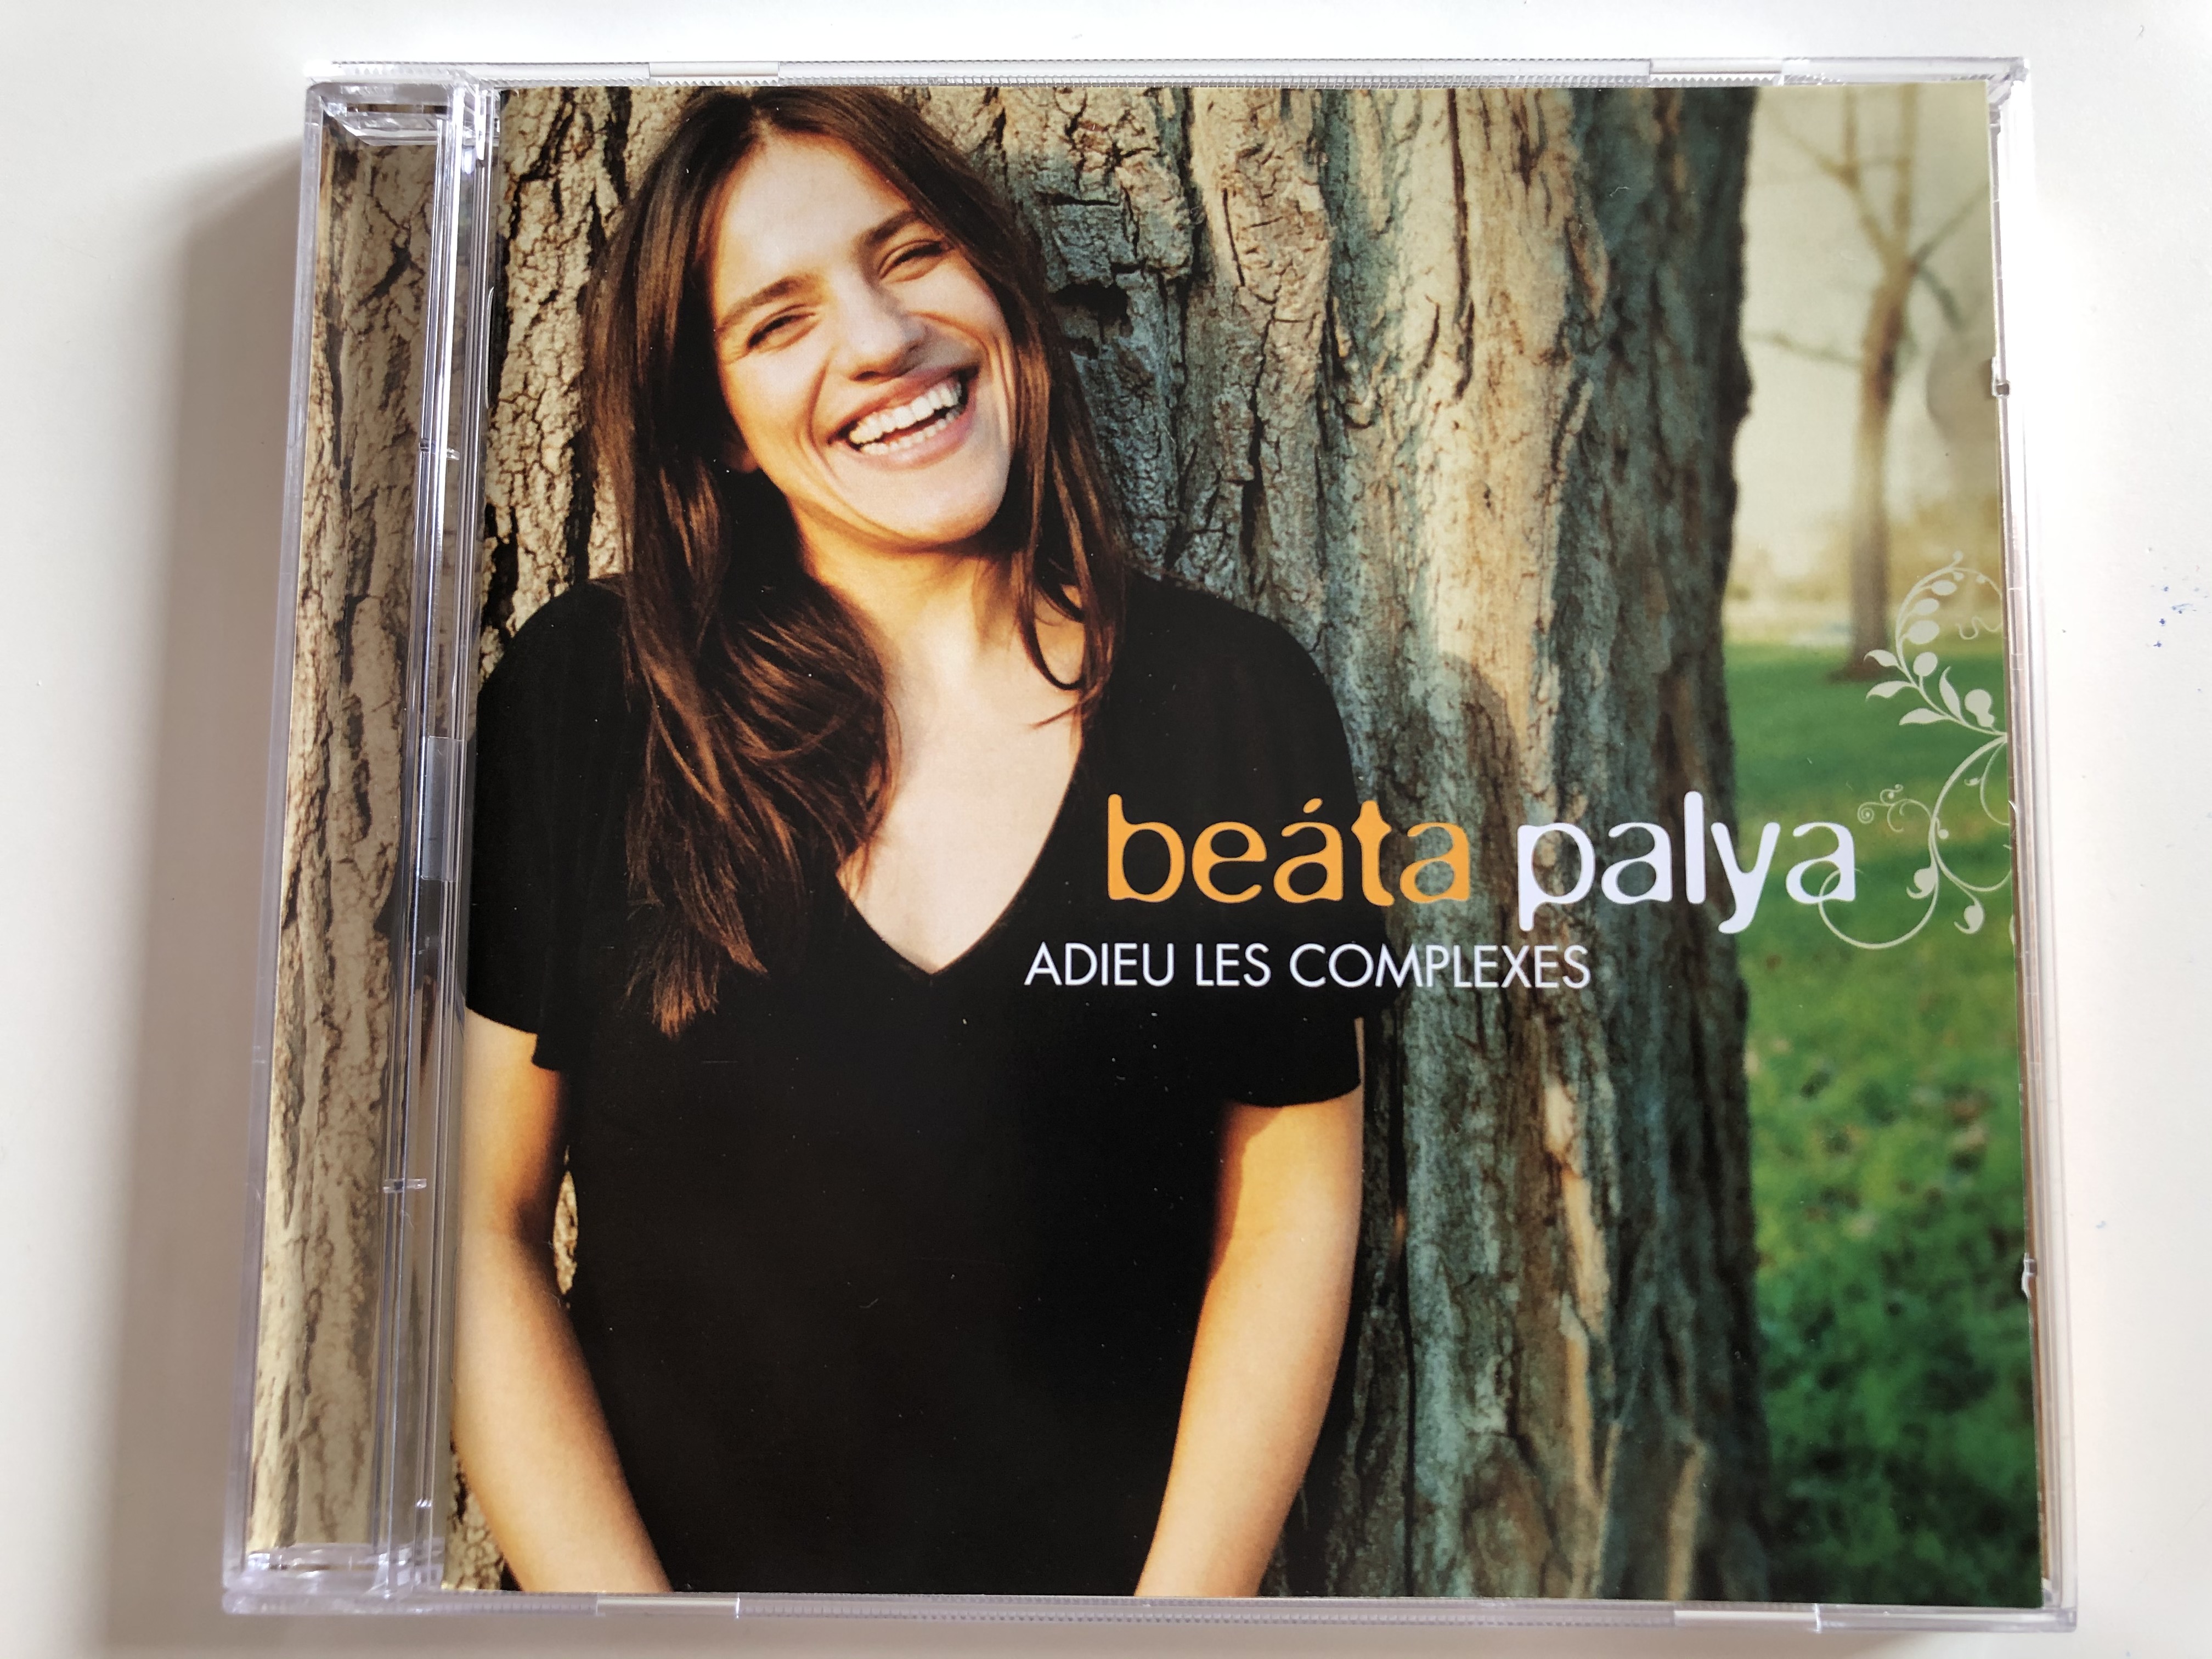 be-ta-palya-adieu-les-complexes-sony-bmg-music-entertainment-audio-cd-2008-88697323112-1-.jpg